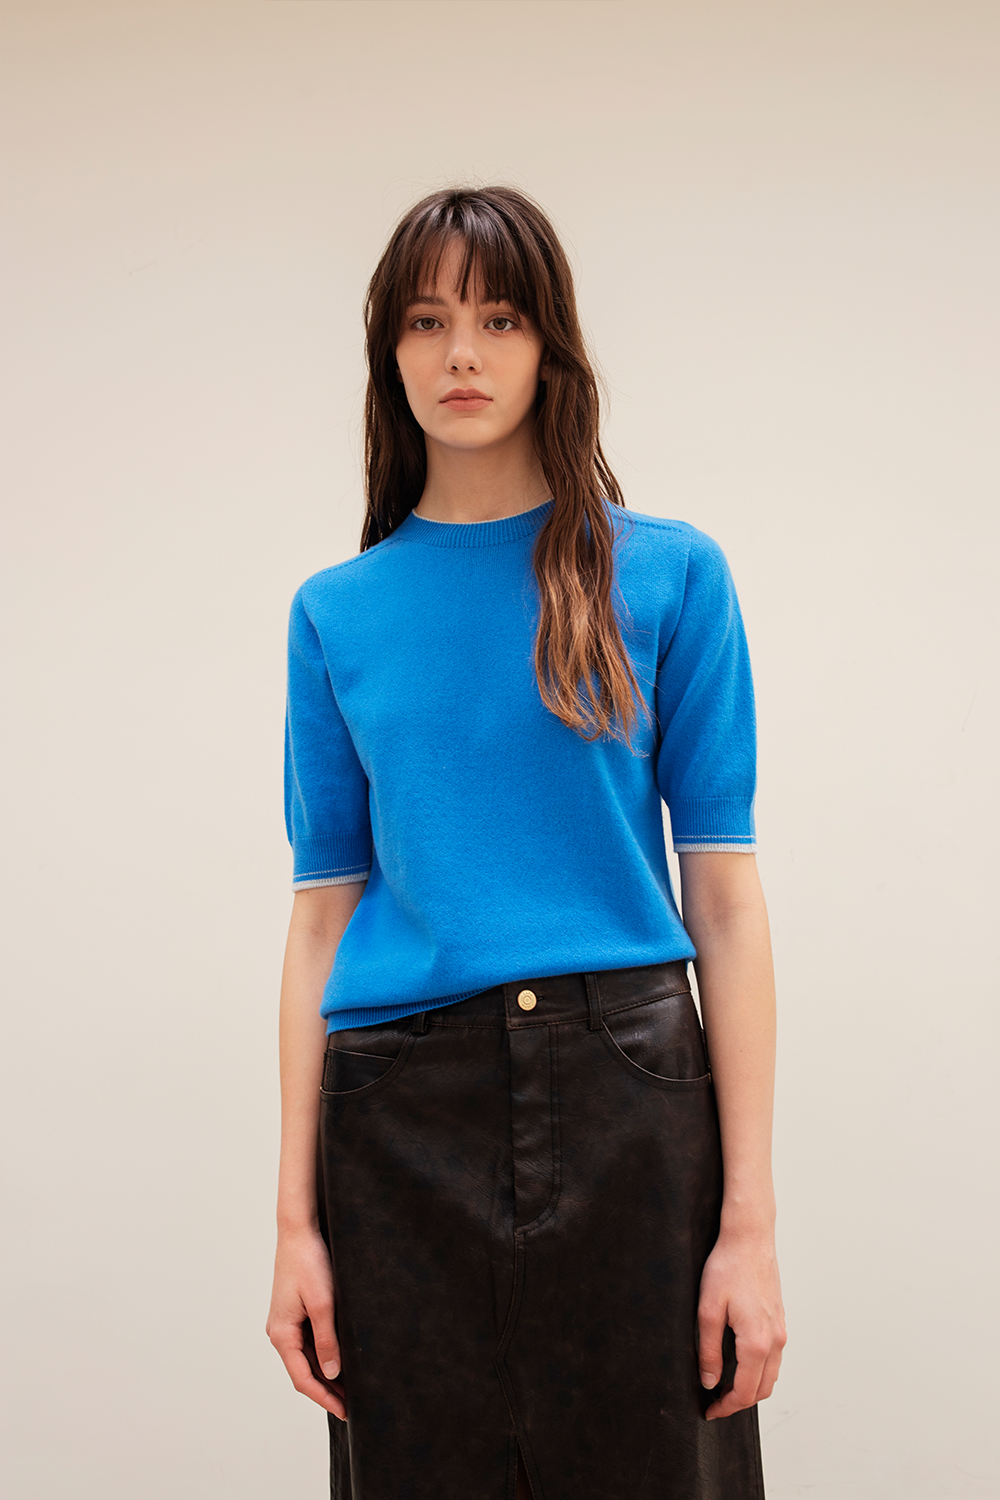 [Black label: Cariaggi] 프리미엄 퓨어 캐시미어100 반팔 라운드넥 Premium pure cashmere100 pullover - Fine blue